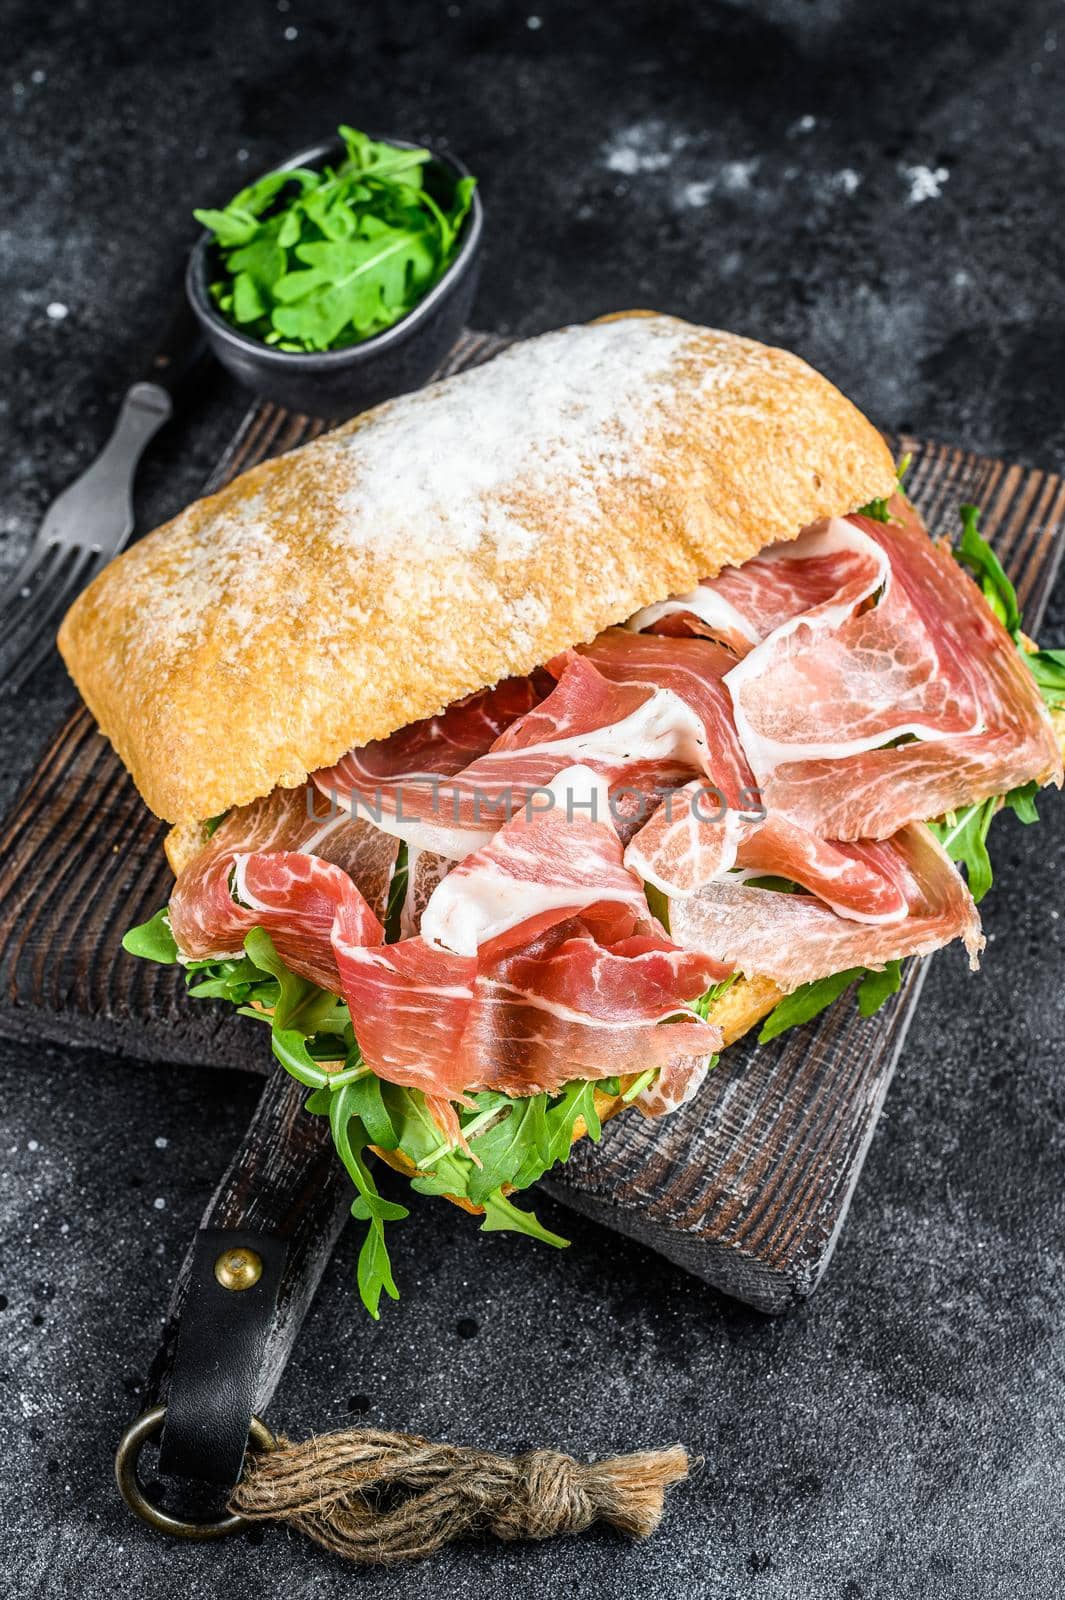 iberico jamon ham sandwich on ciabatta bread. Black background. Top view.